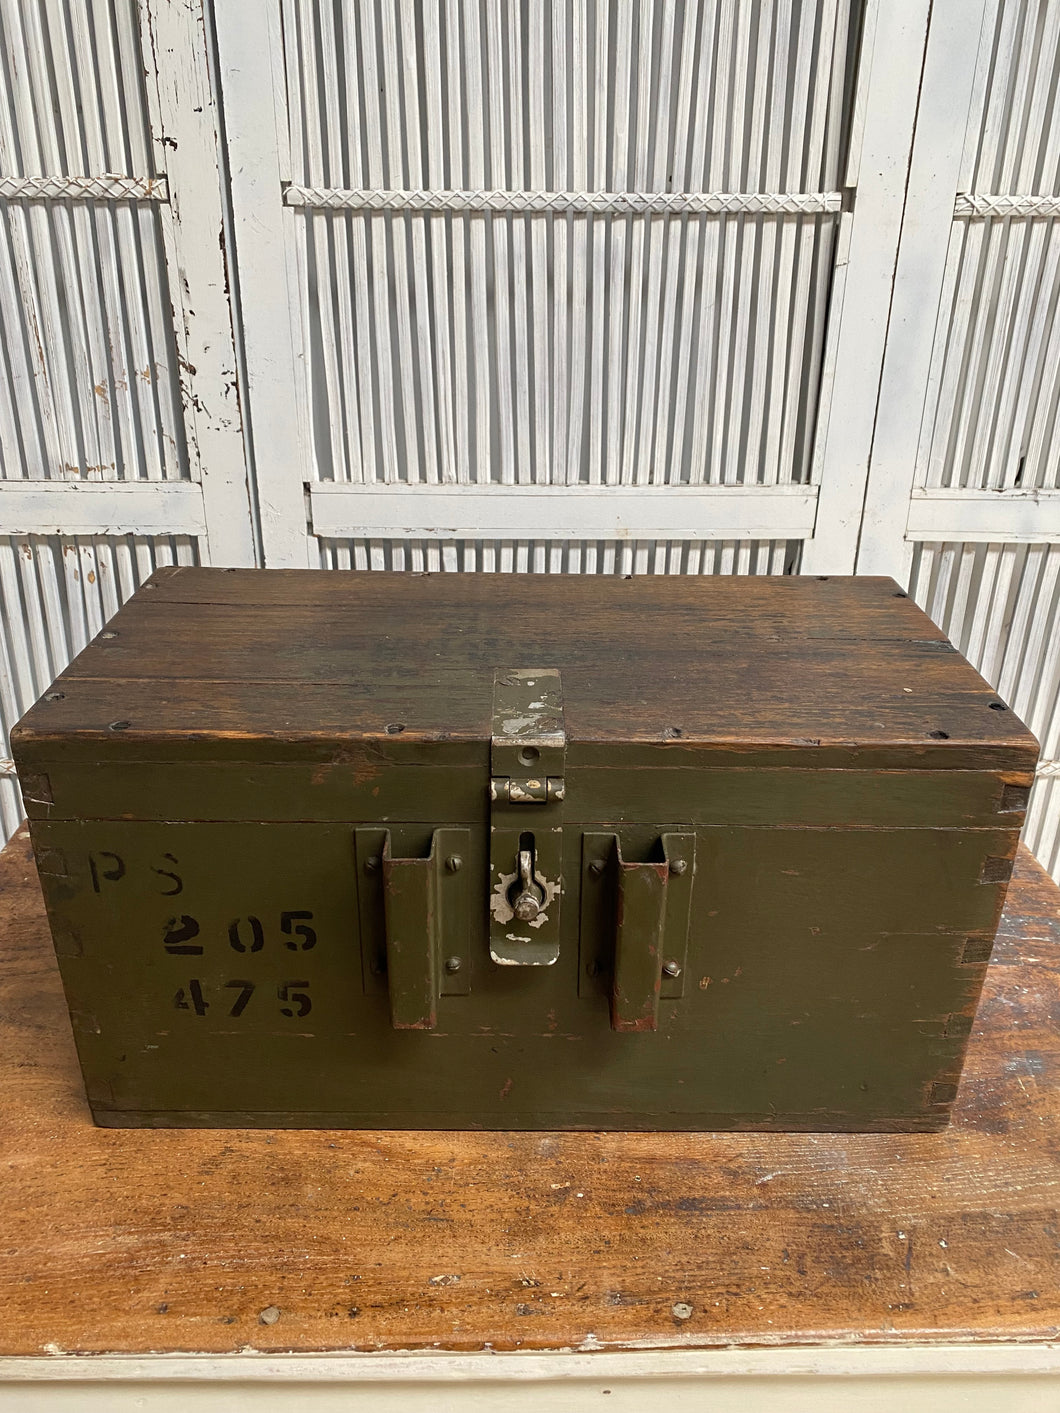 Vintage Polsten 20mm MG Spares Box